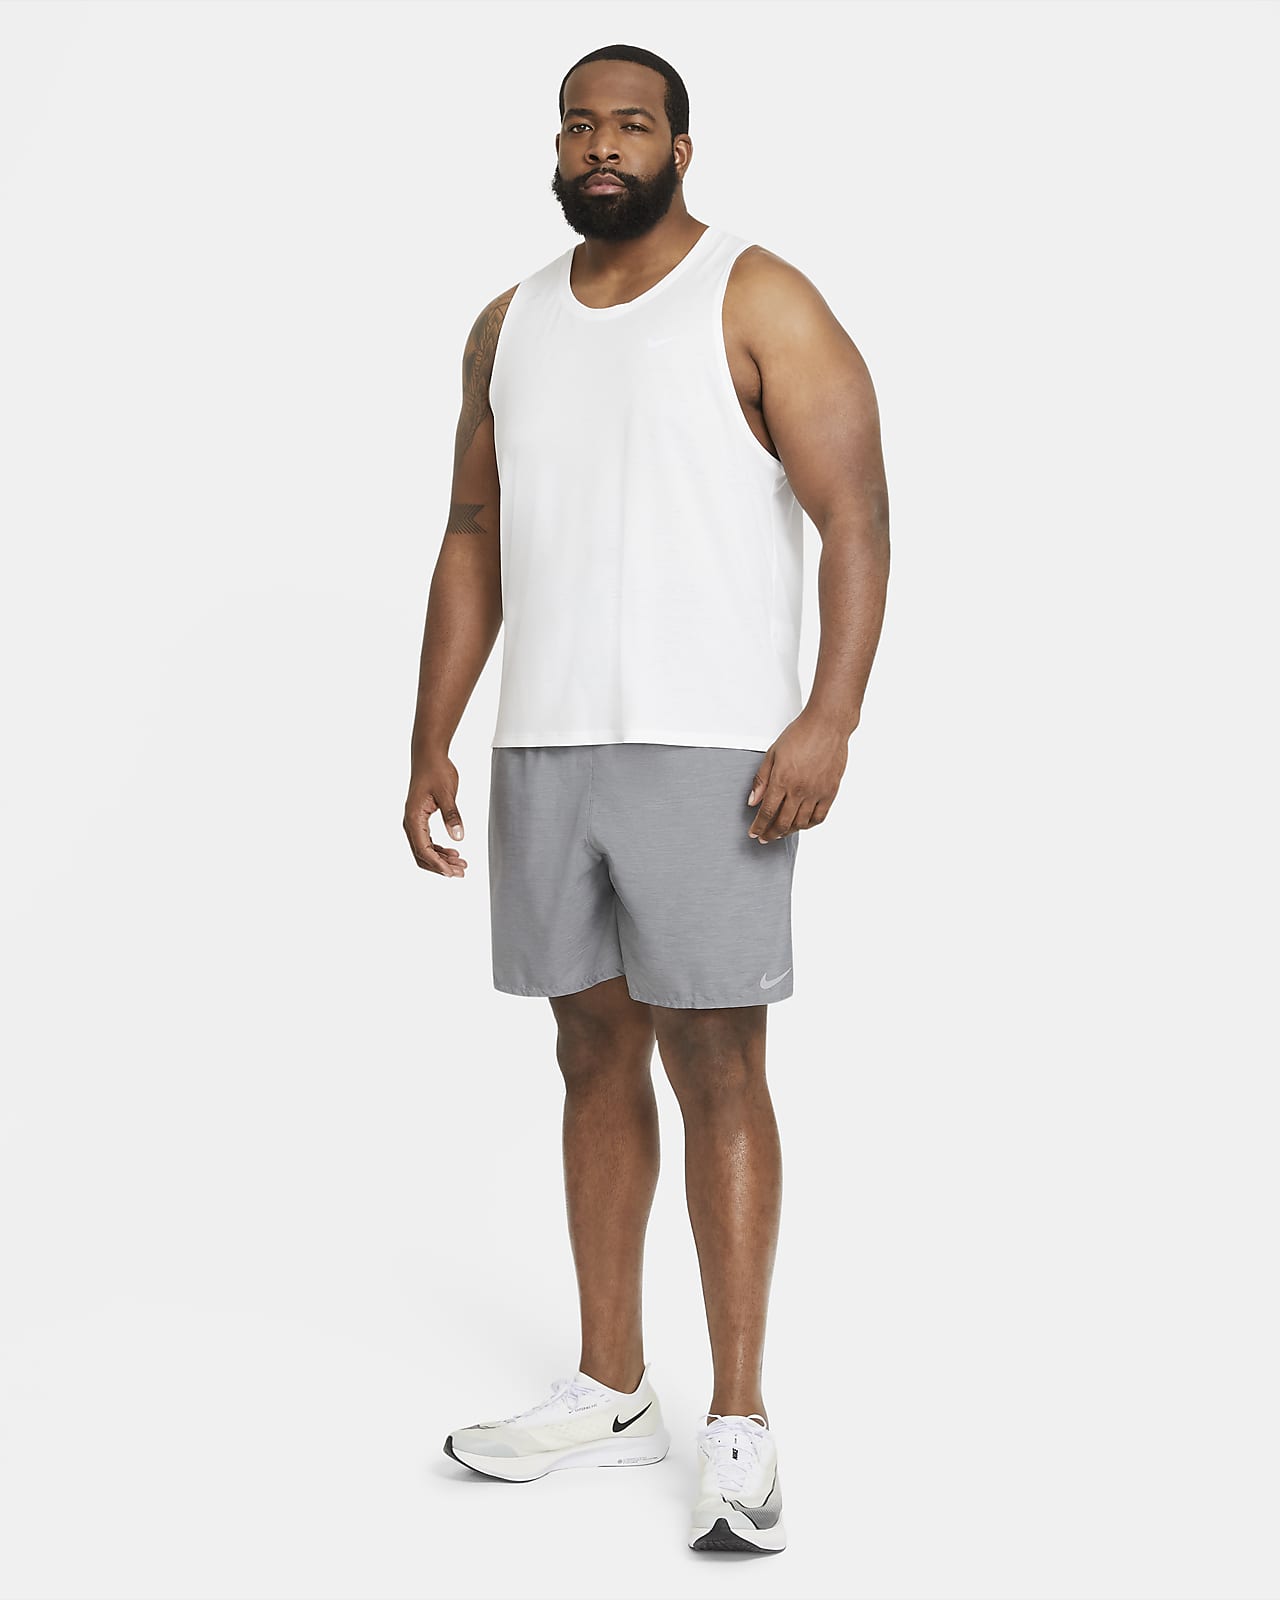 Shorts de running con forro de ropa interior Dri-FIT de 18 cm para hombre  Nike Challenger